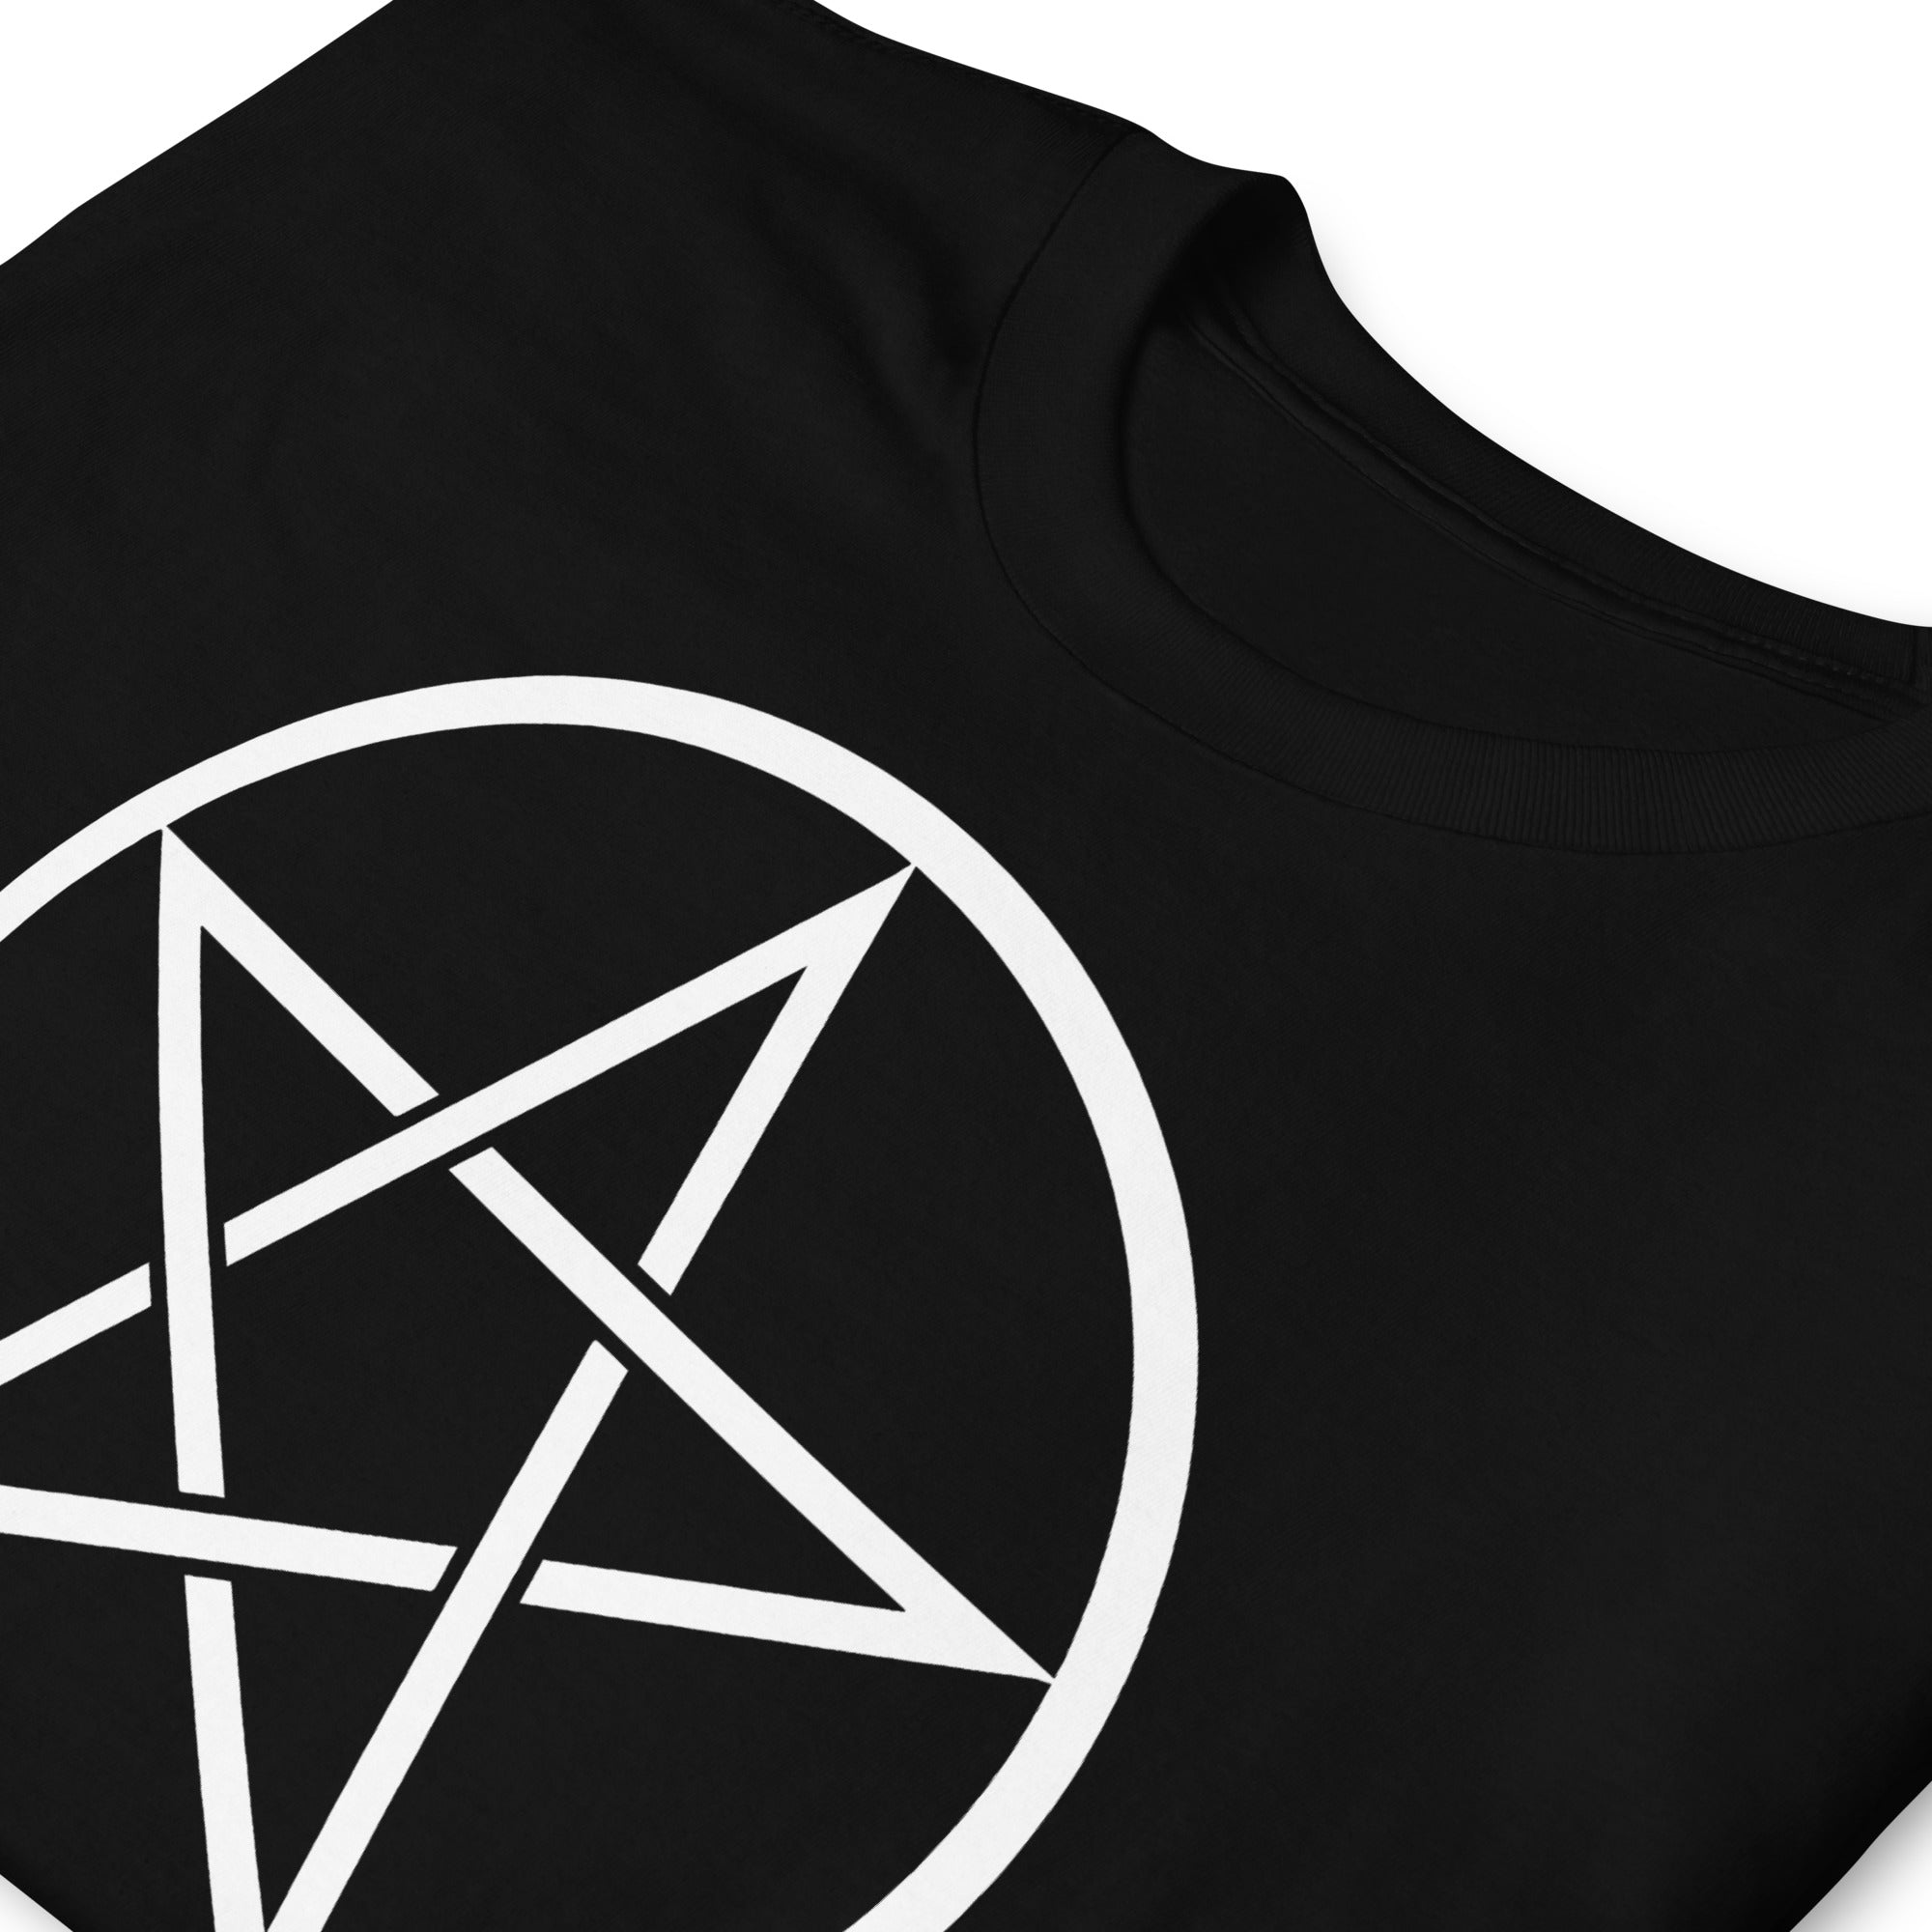 White Goth Wiccan Woven Pentagram Men's Short-Sleeve T-Shirt - Edge of Life Designs